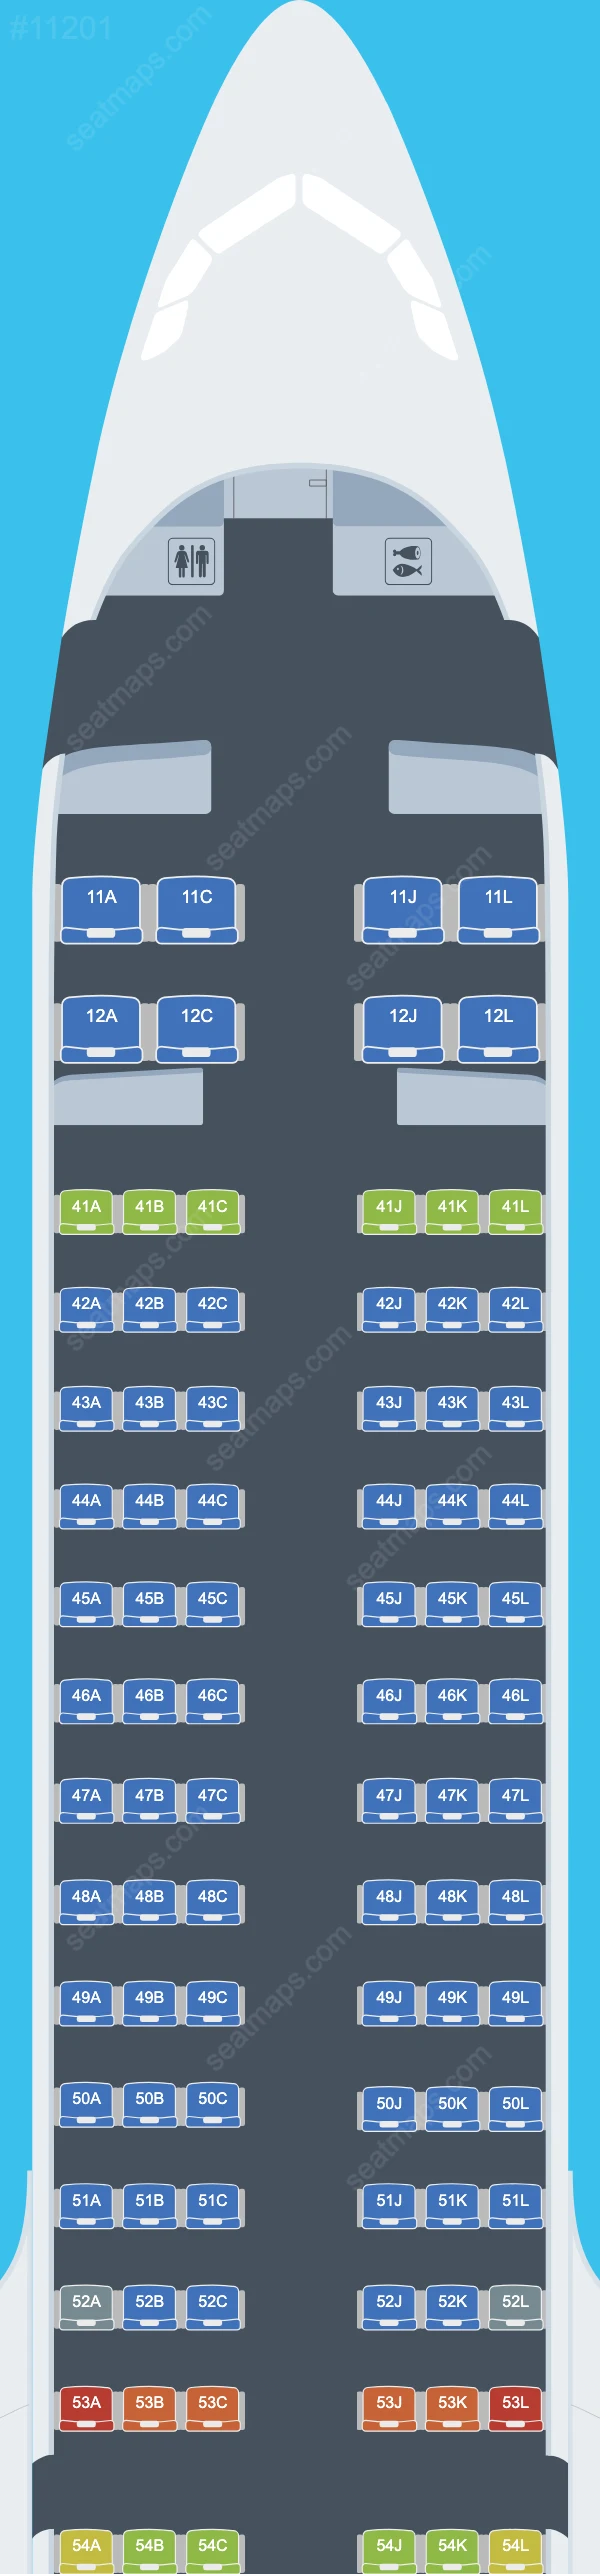 XiamenAir Airbus A321neo Sitzplan für Flugzeuge A321neo